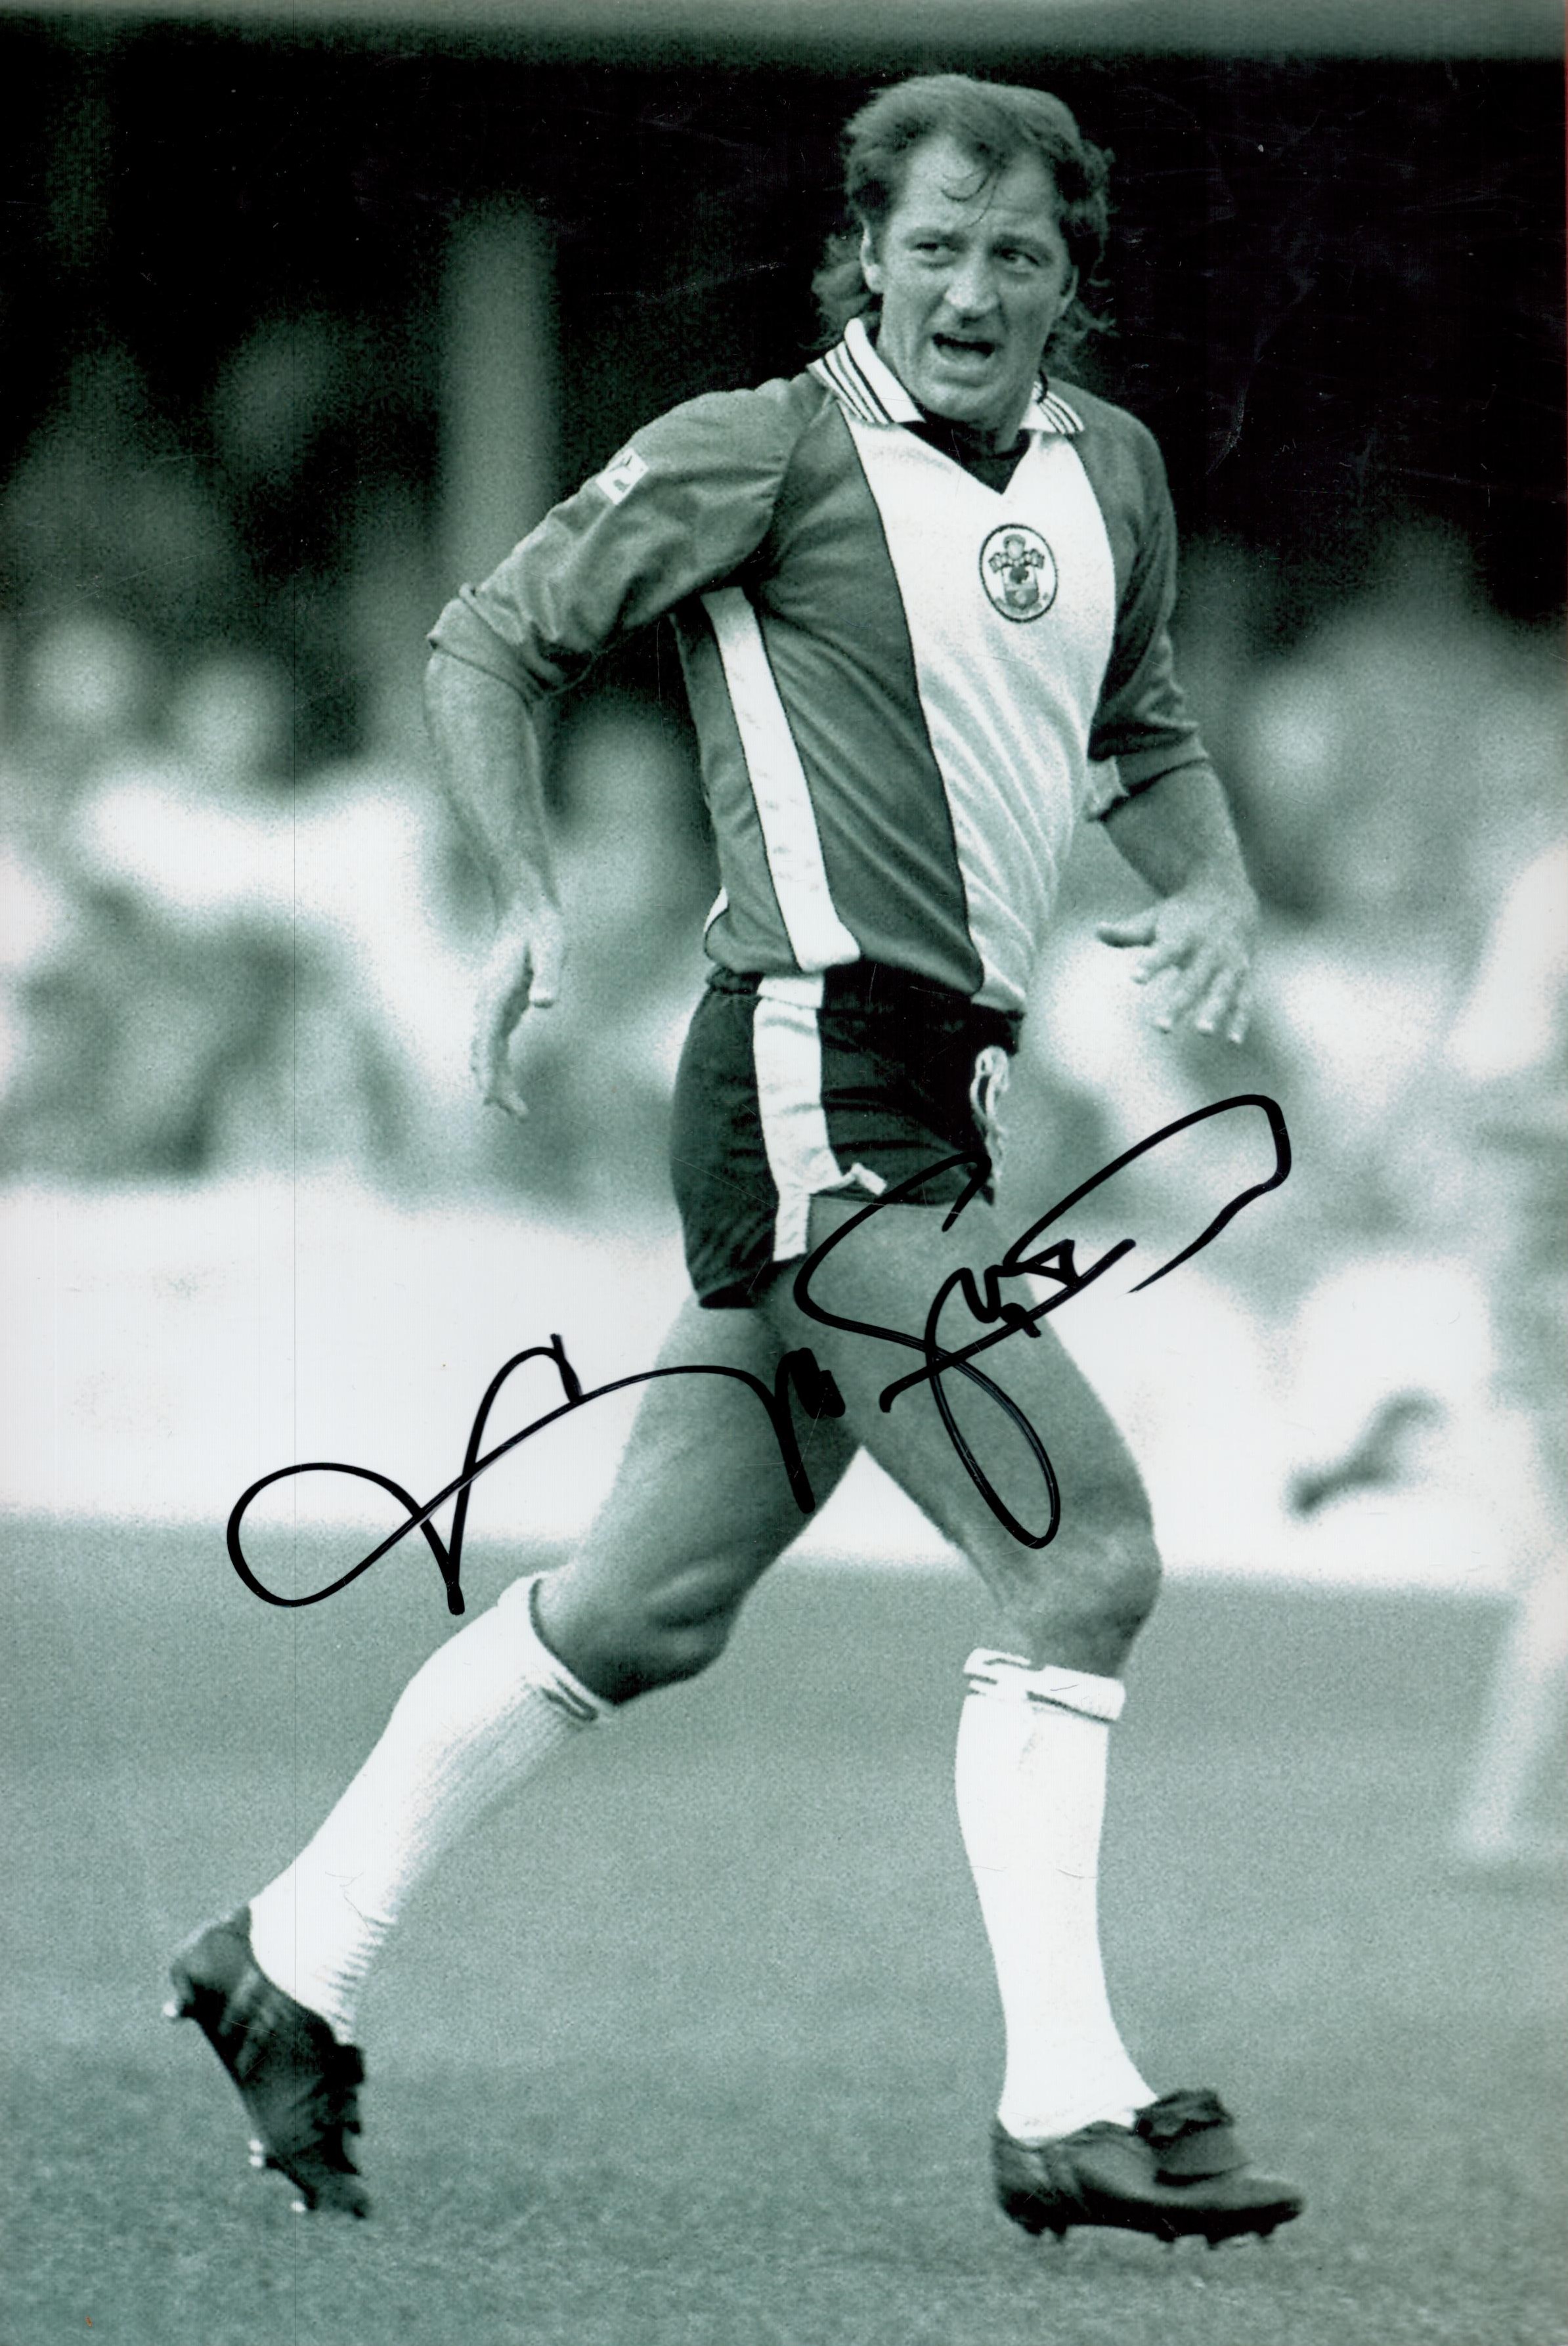 Former Southampton Star Frank Worthington Signed 12 x 8 inch Black and White Photo. Good